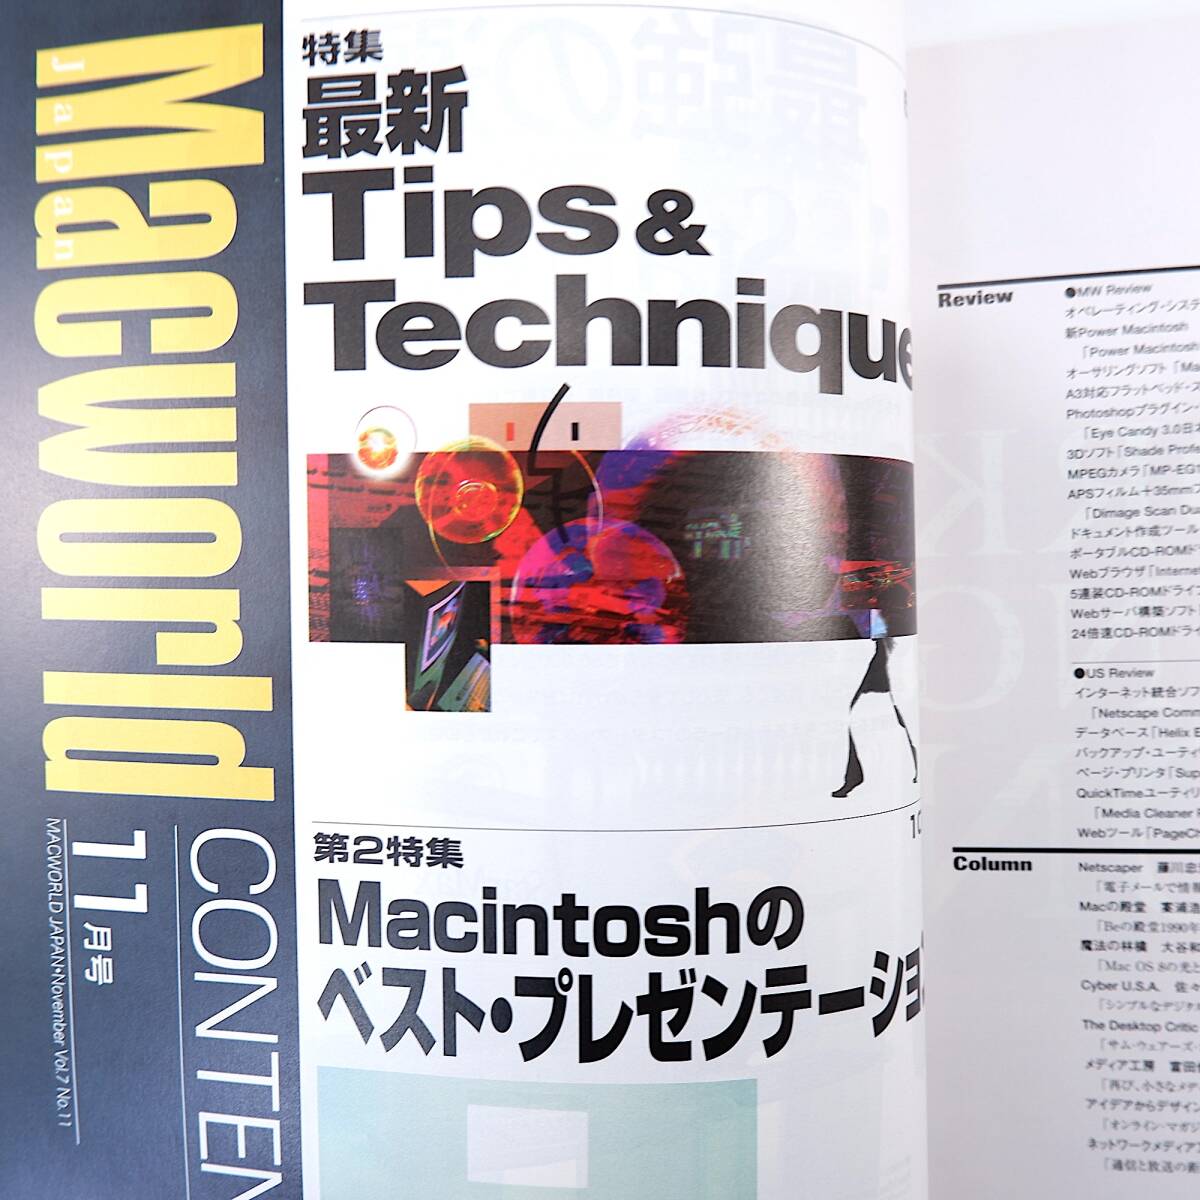 Macworld 1997 год 11 месяц номер | новейший Tips& technique Macintosh. лучший презентация Land.K. зеркало MPEG камера Mac world 